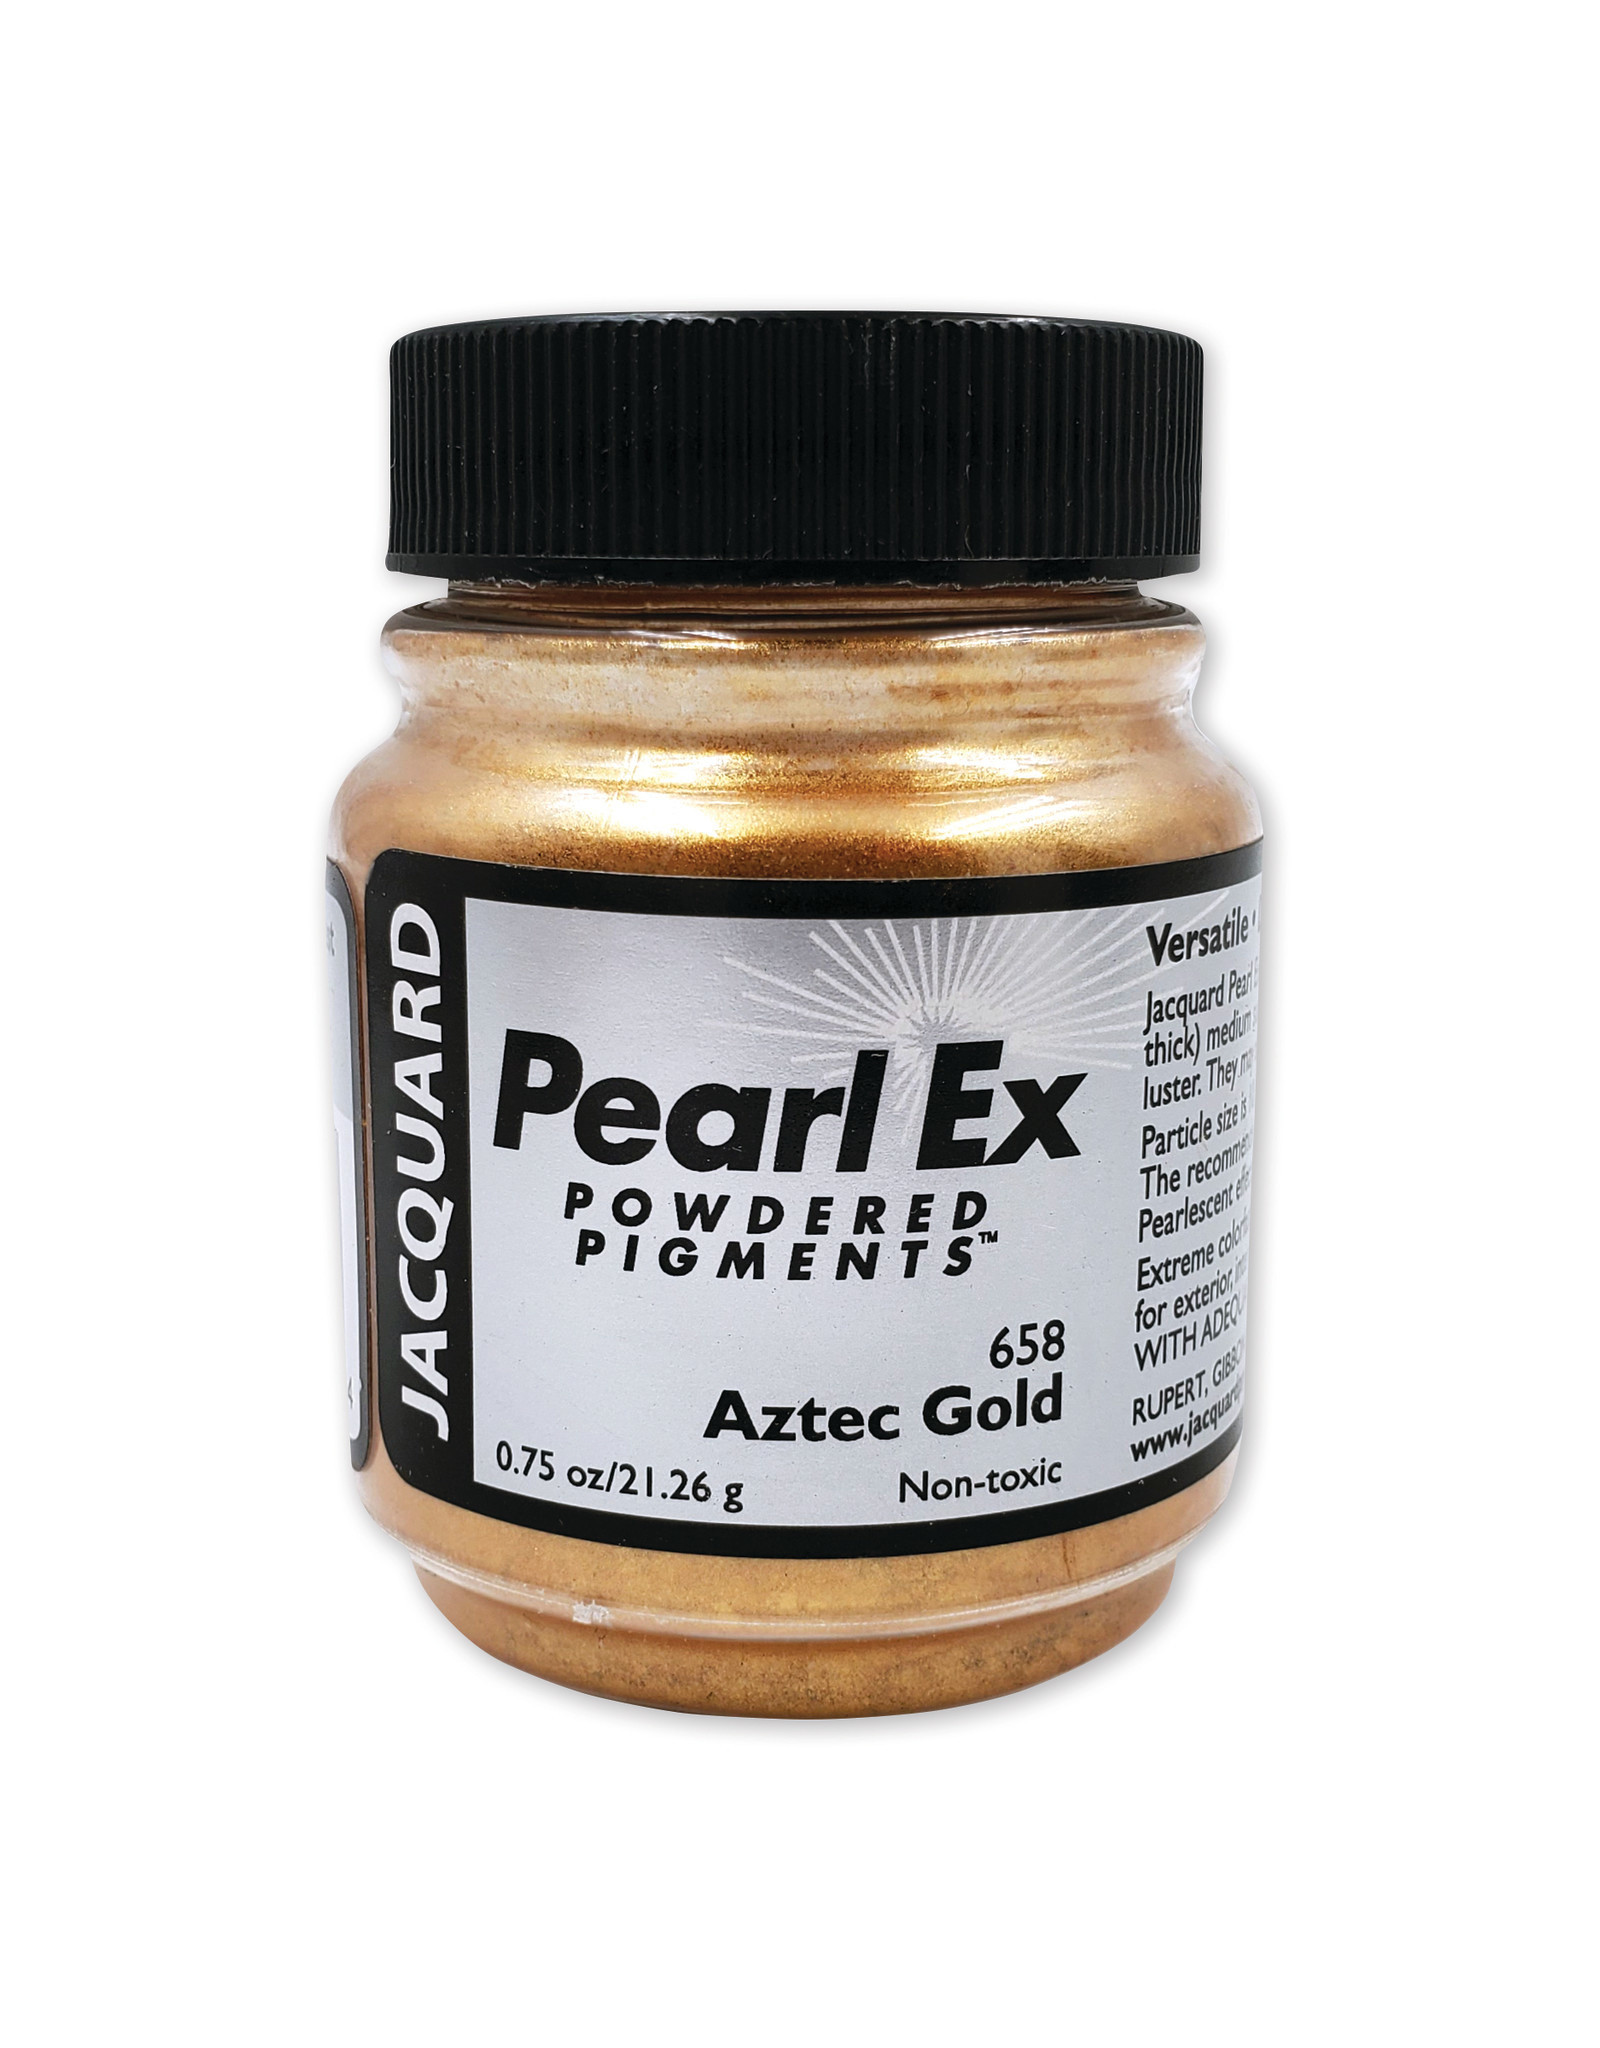 Jacquard Jacquard Pearl Ex, Aztec Gold #658 3/4oz